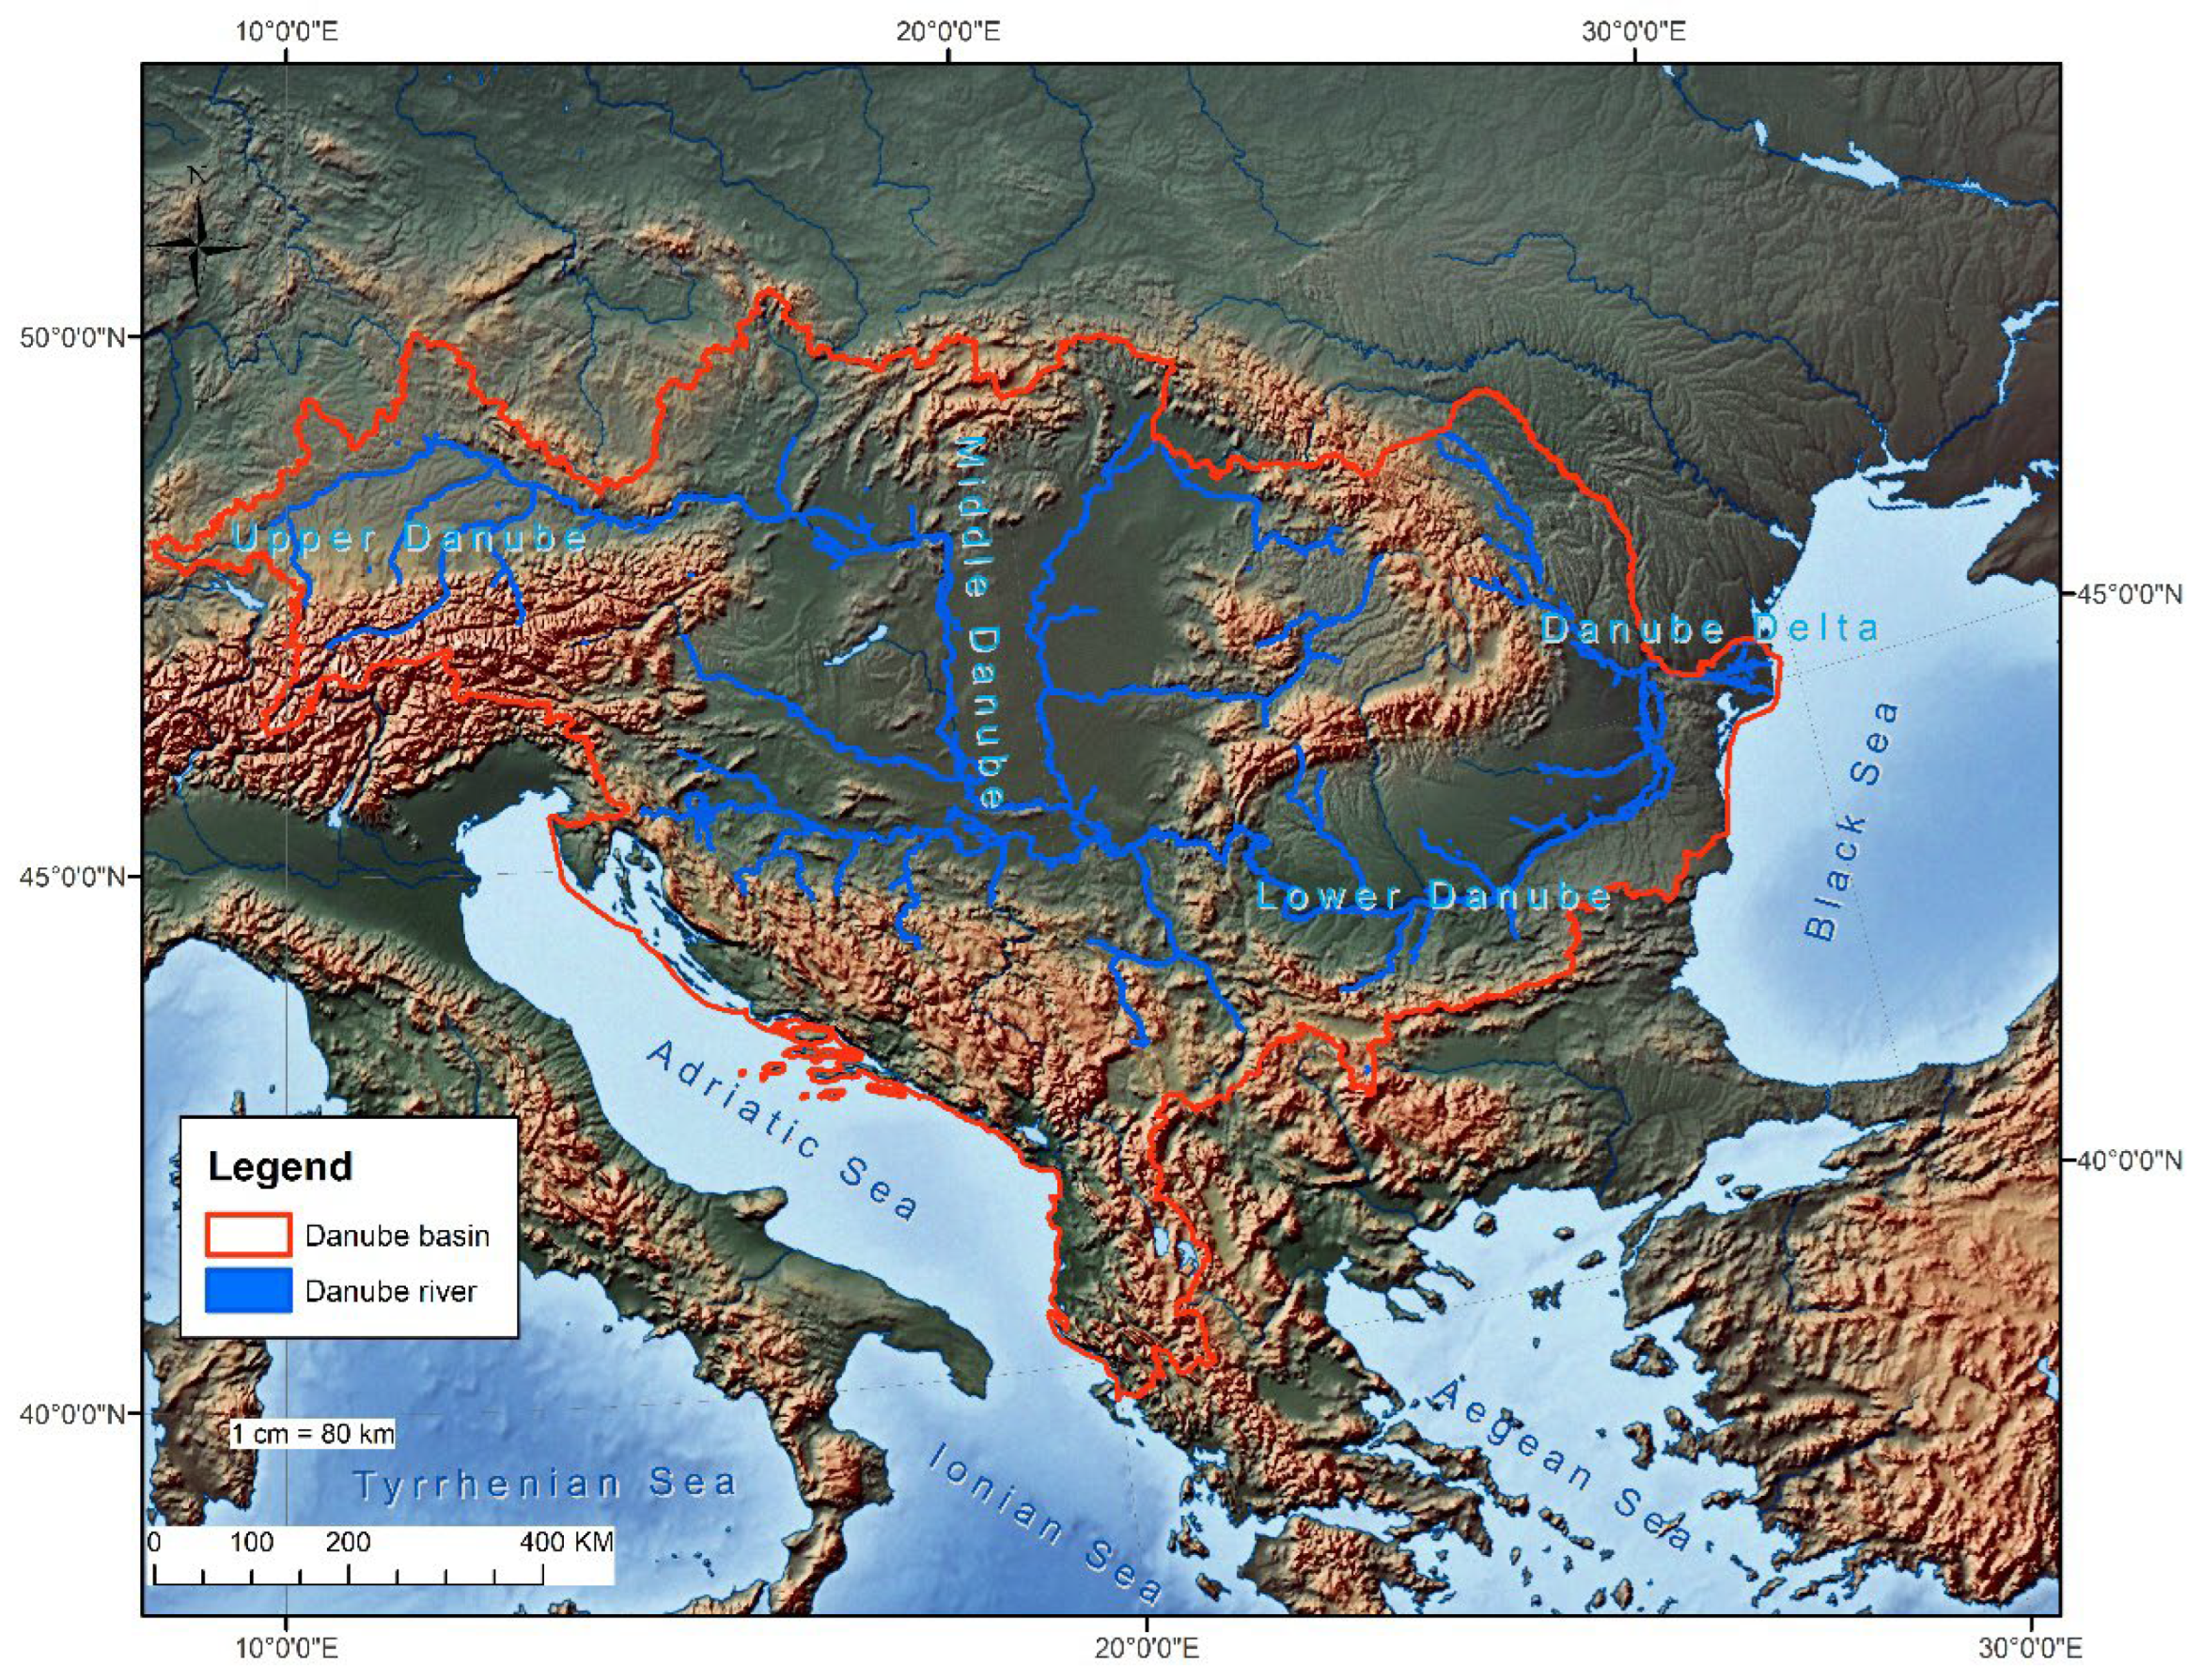 Fishes | Full-Text | Danube Delta: The Achilles Heel of Danube River&ndash;Danube Delta&ndash;Black Sea Region Fish Diversity under a Black Sea Impact Scenario Due to Level Rise&mdash;A Prospective Review